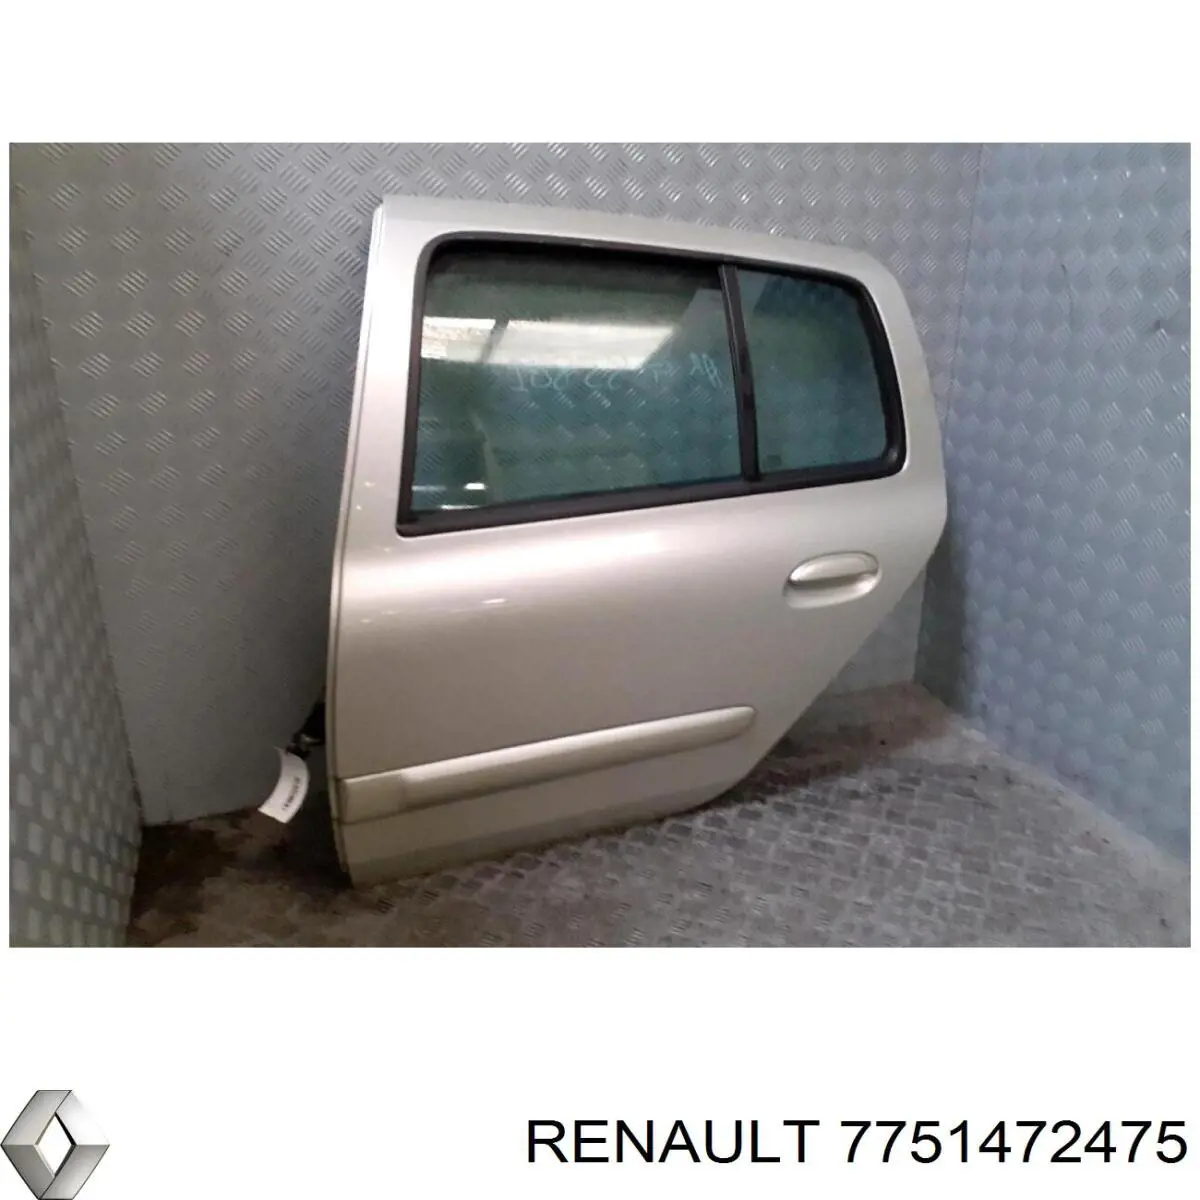 7752232799 Renault (RVI) puerta trasera izquierda